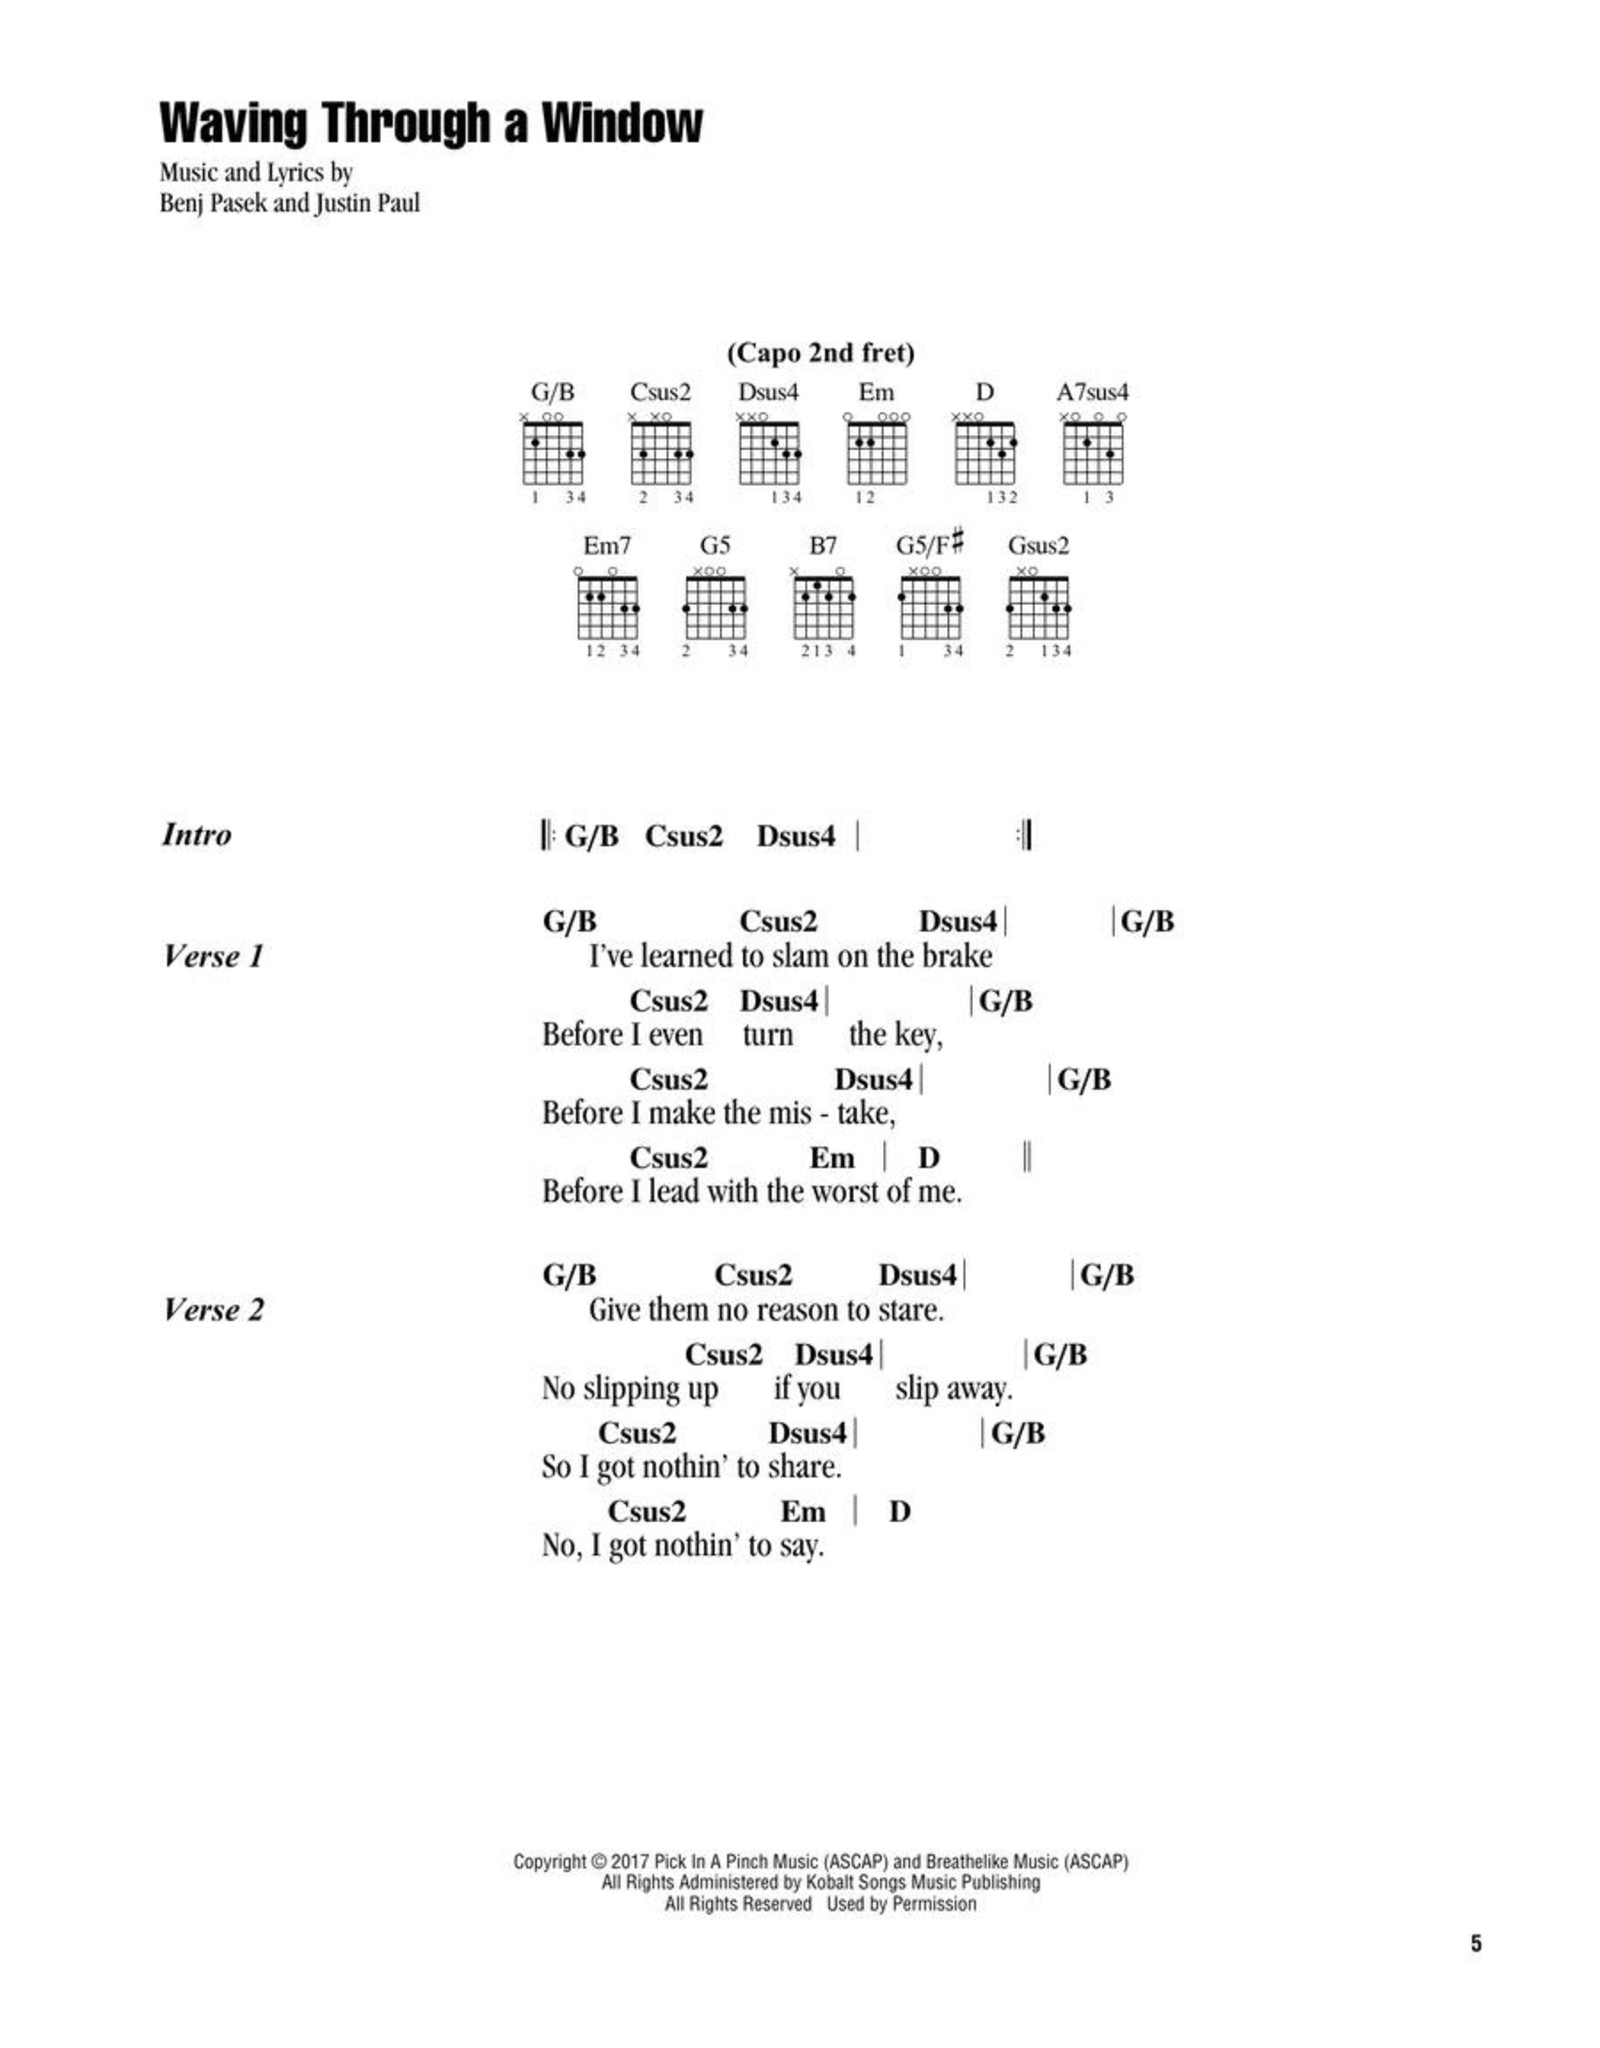 Hal Leonard Dear Evan Hansen - Strum & Sing Guitar